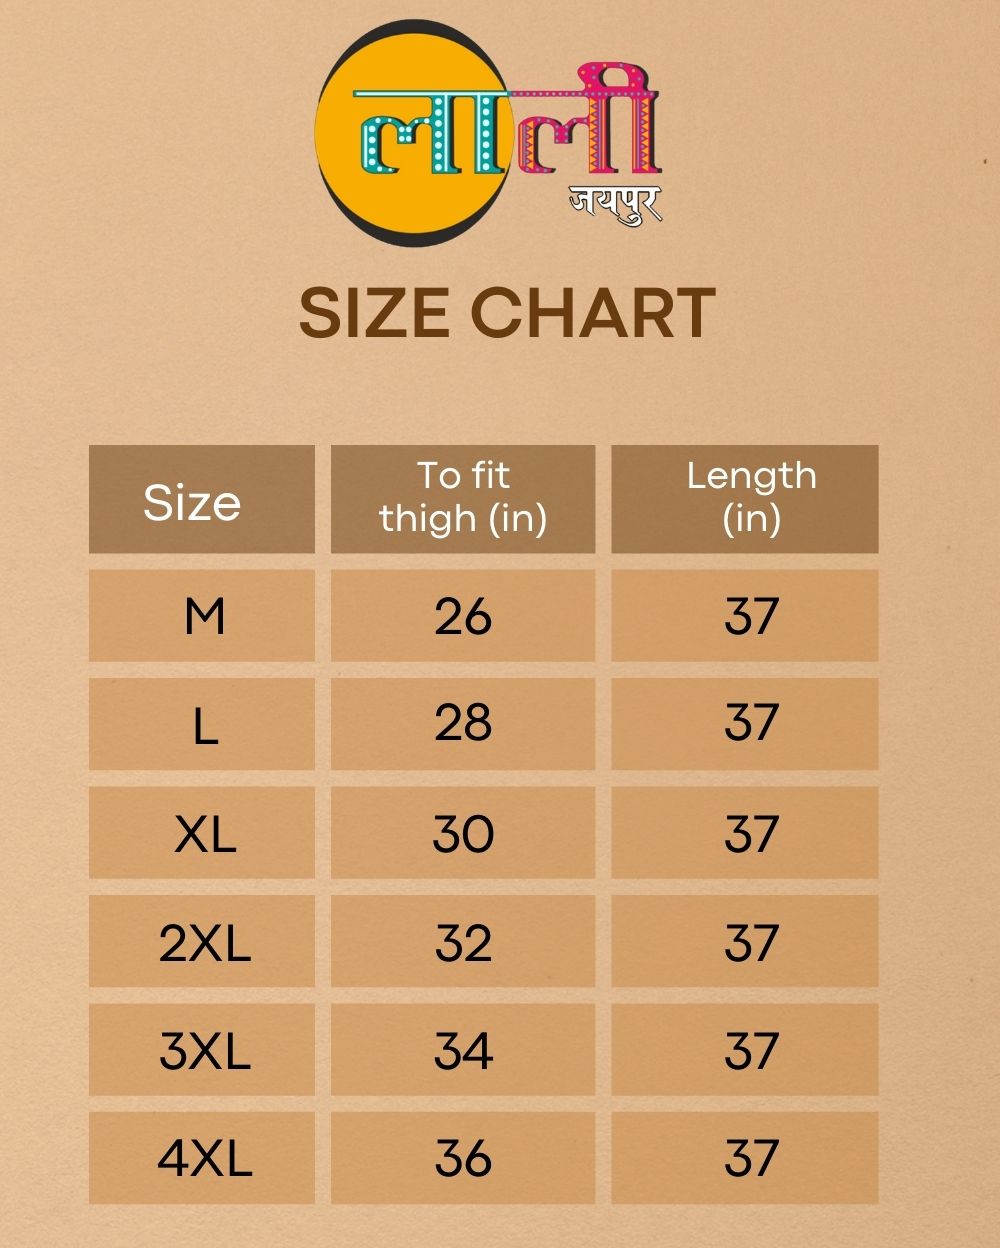 Share 113+ lycra leggings size chart latest